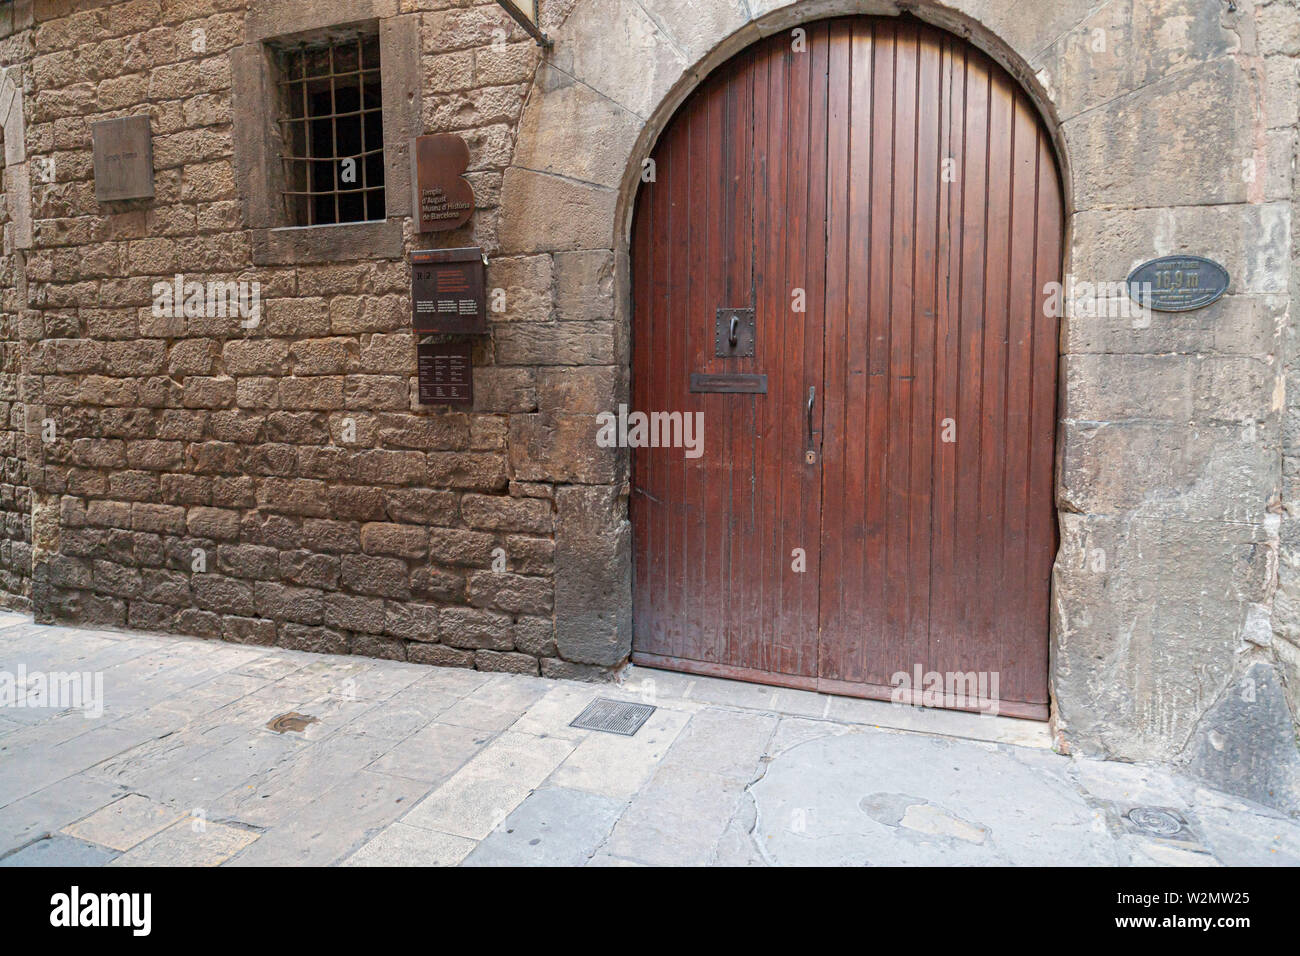 Barcelona, Temple of Augustus door entrance in gothic quarter. Stock Photo